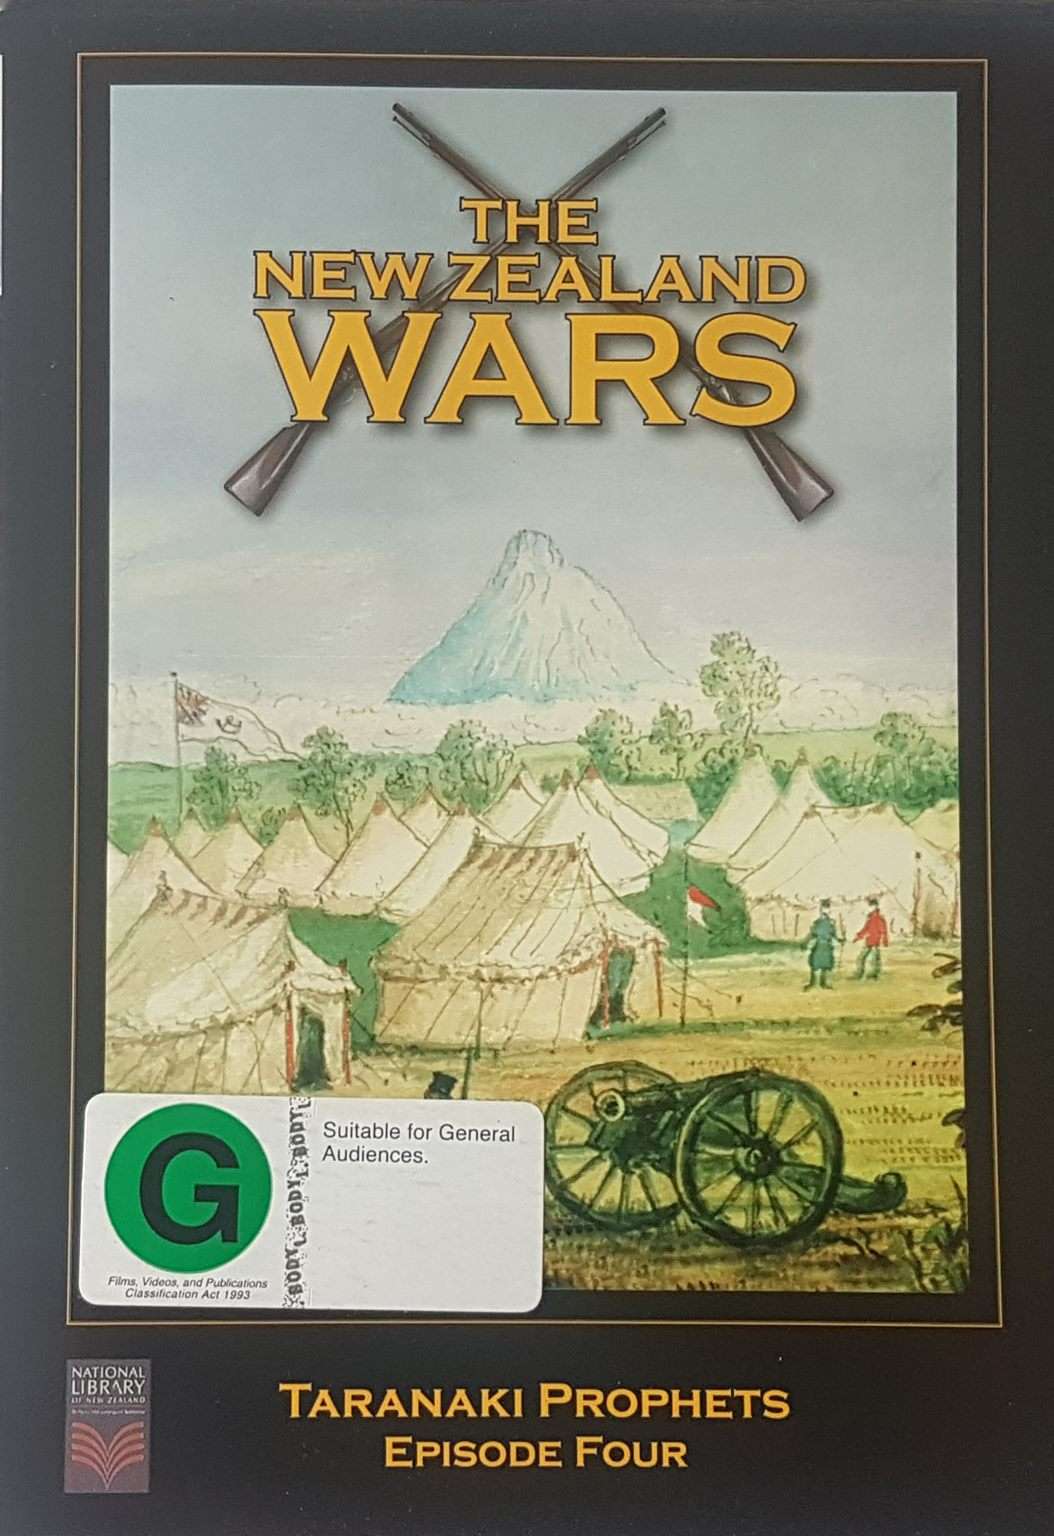 The New Zealand Wars: Episode 4 - Taranaki Prophets